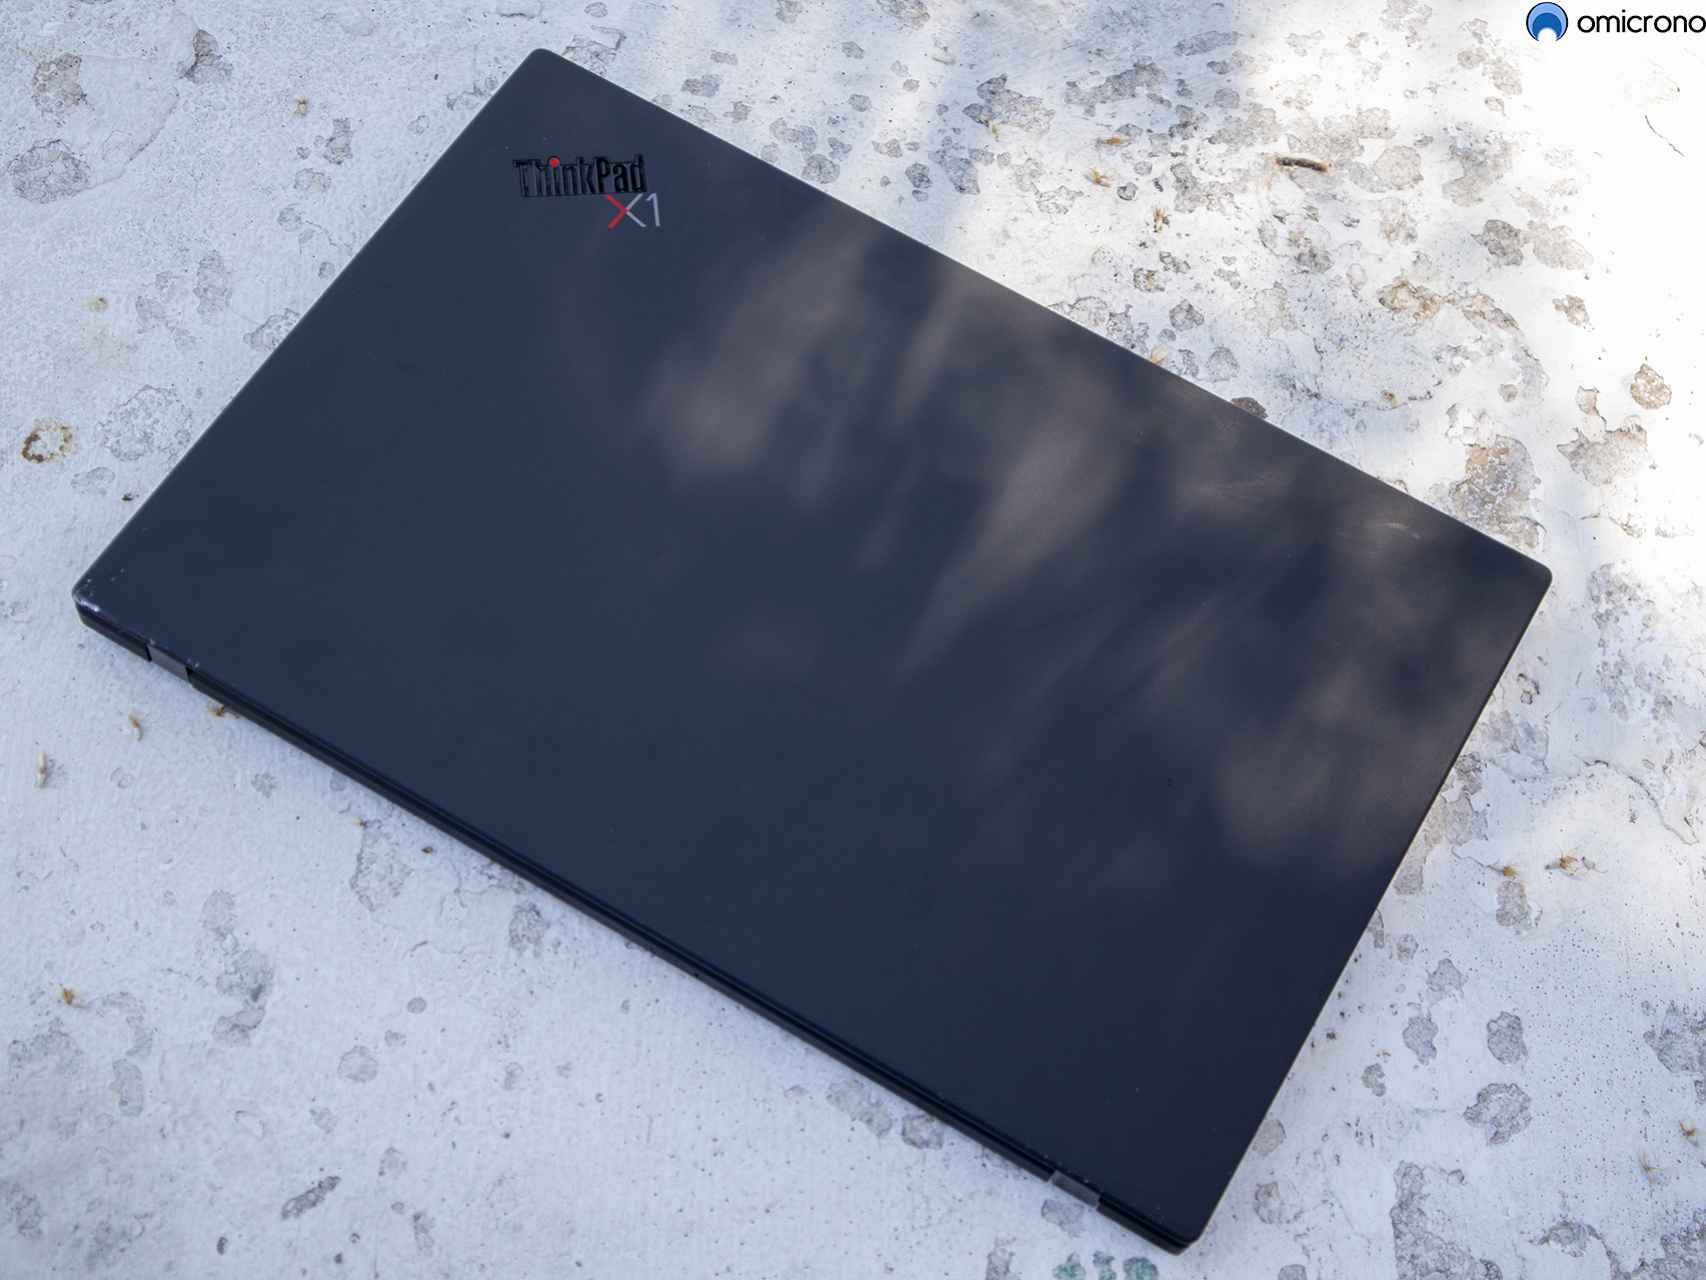 ThinkPad X1 Carbon.